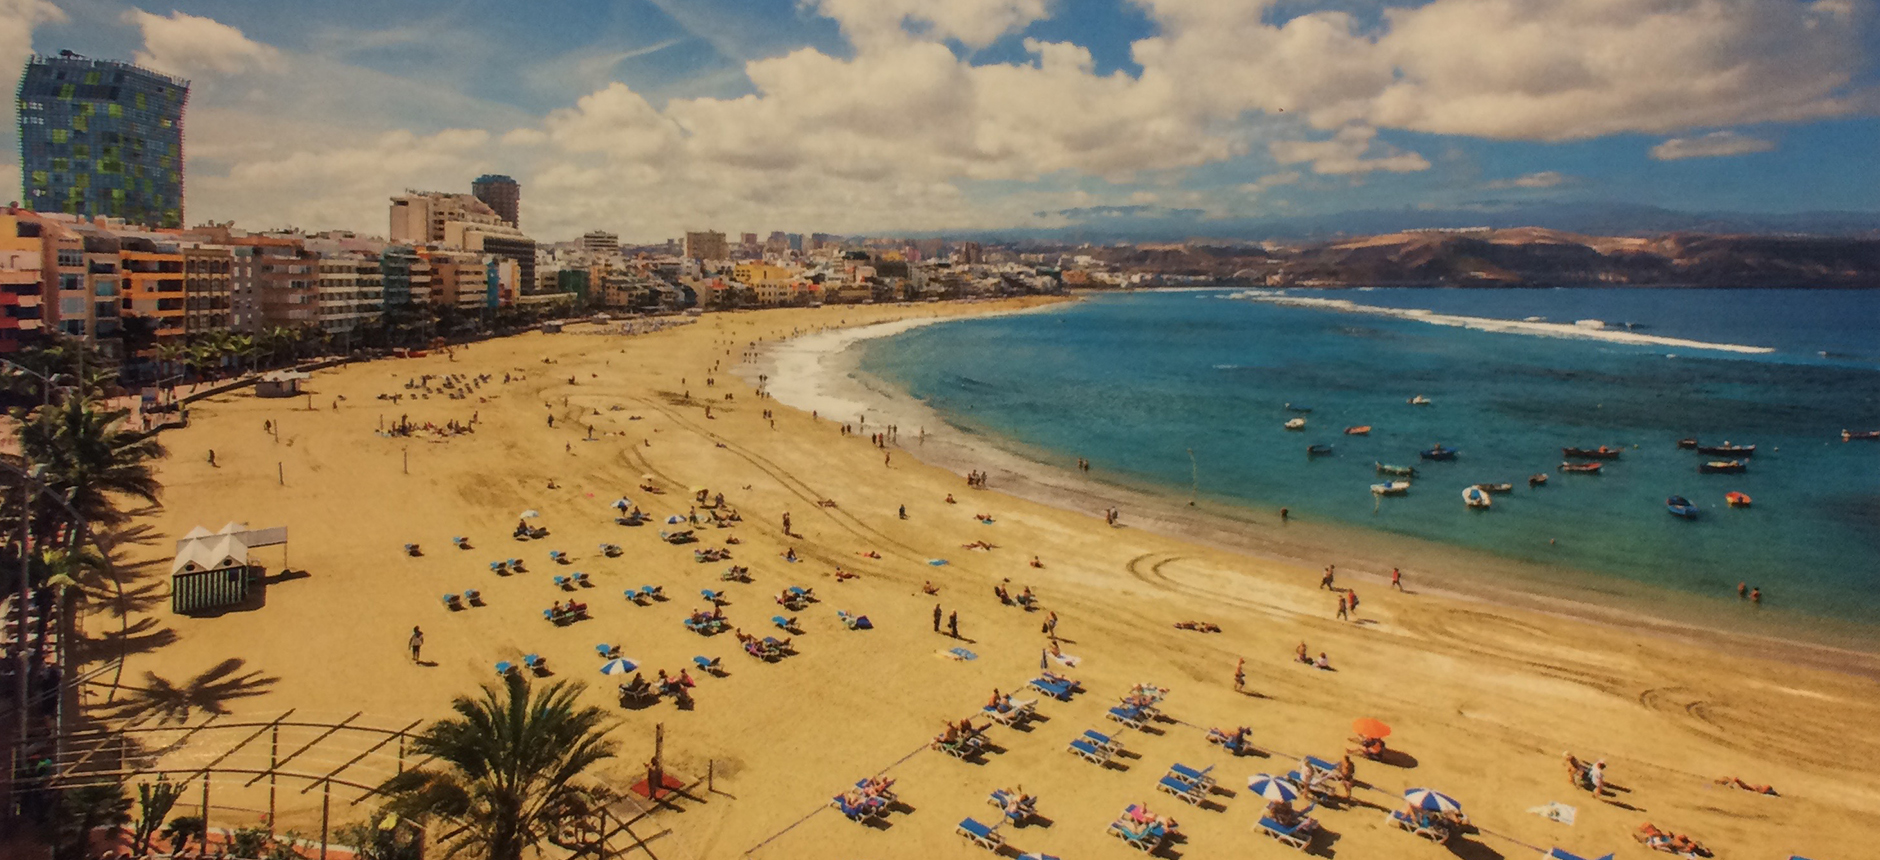 Postcards to Wanda: Canary Islands